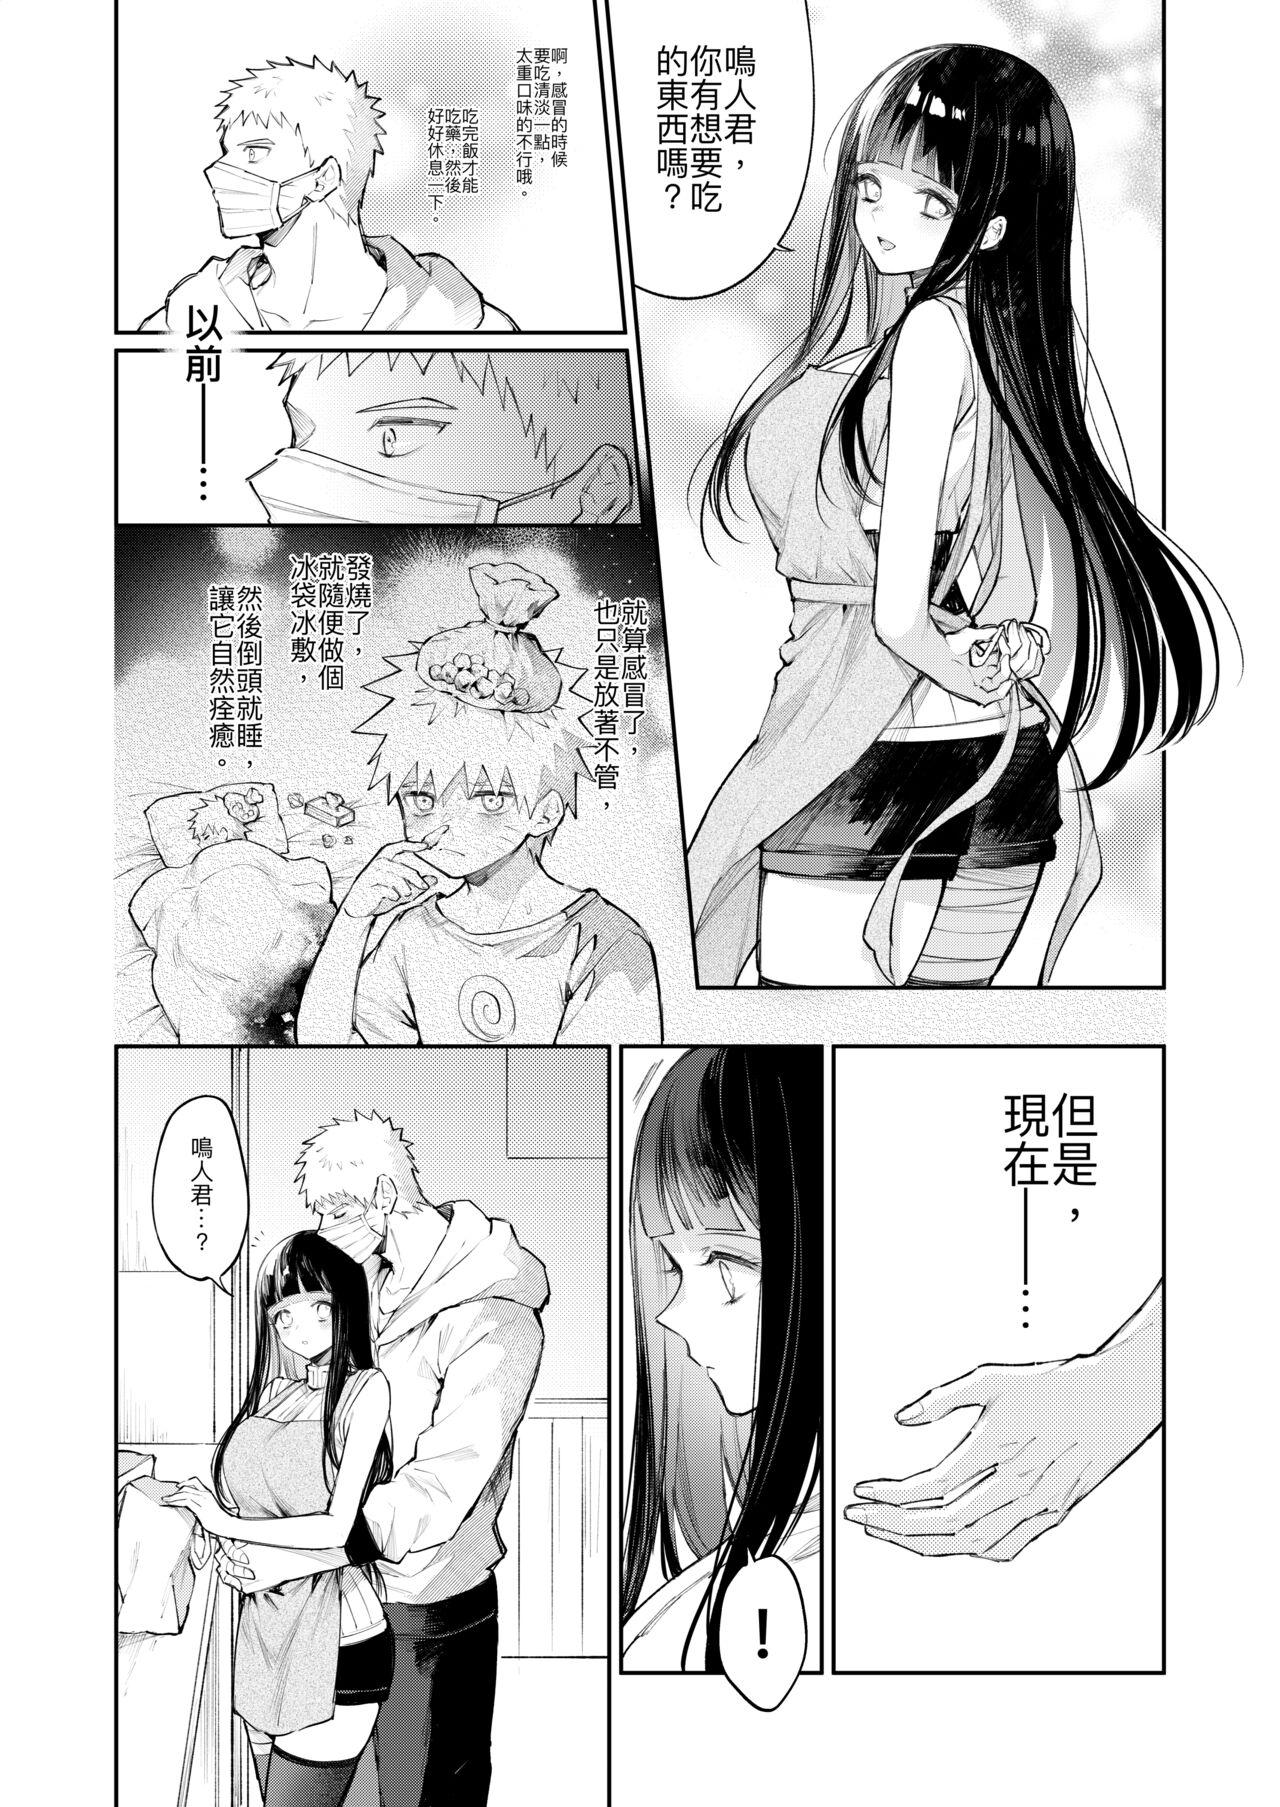 Ftvgirls 感冒 - Naruto Rico - Page 2